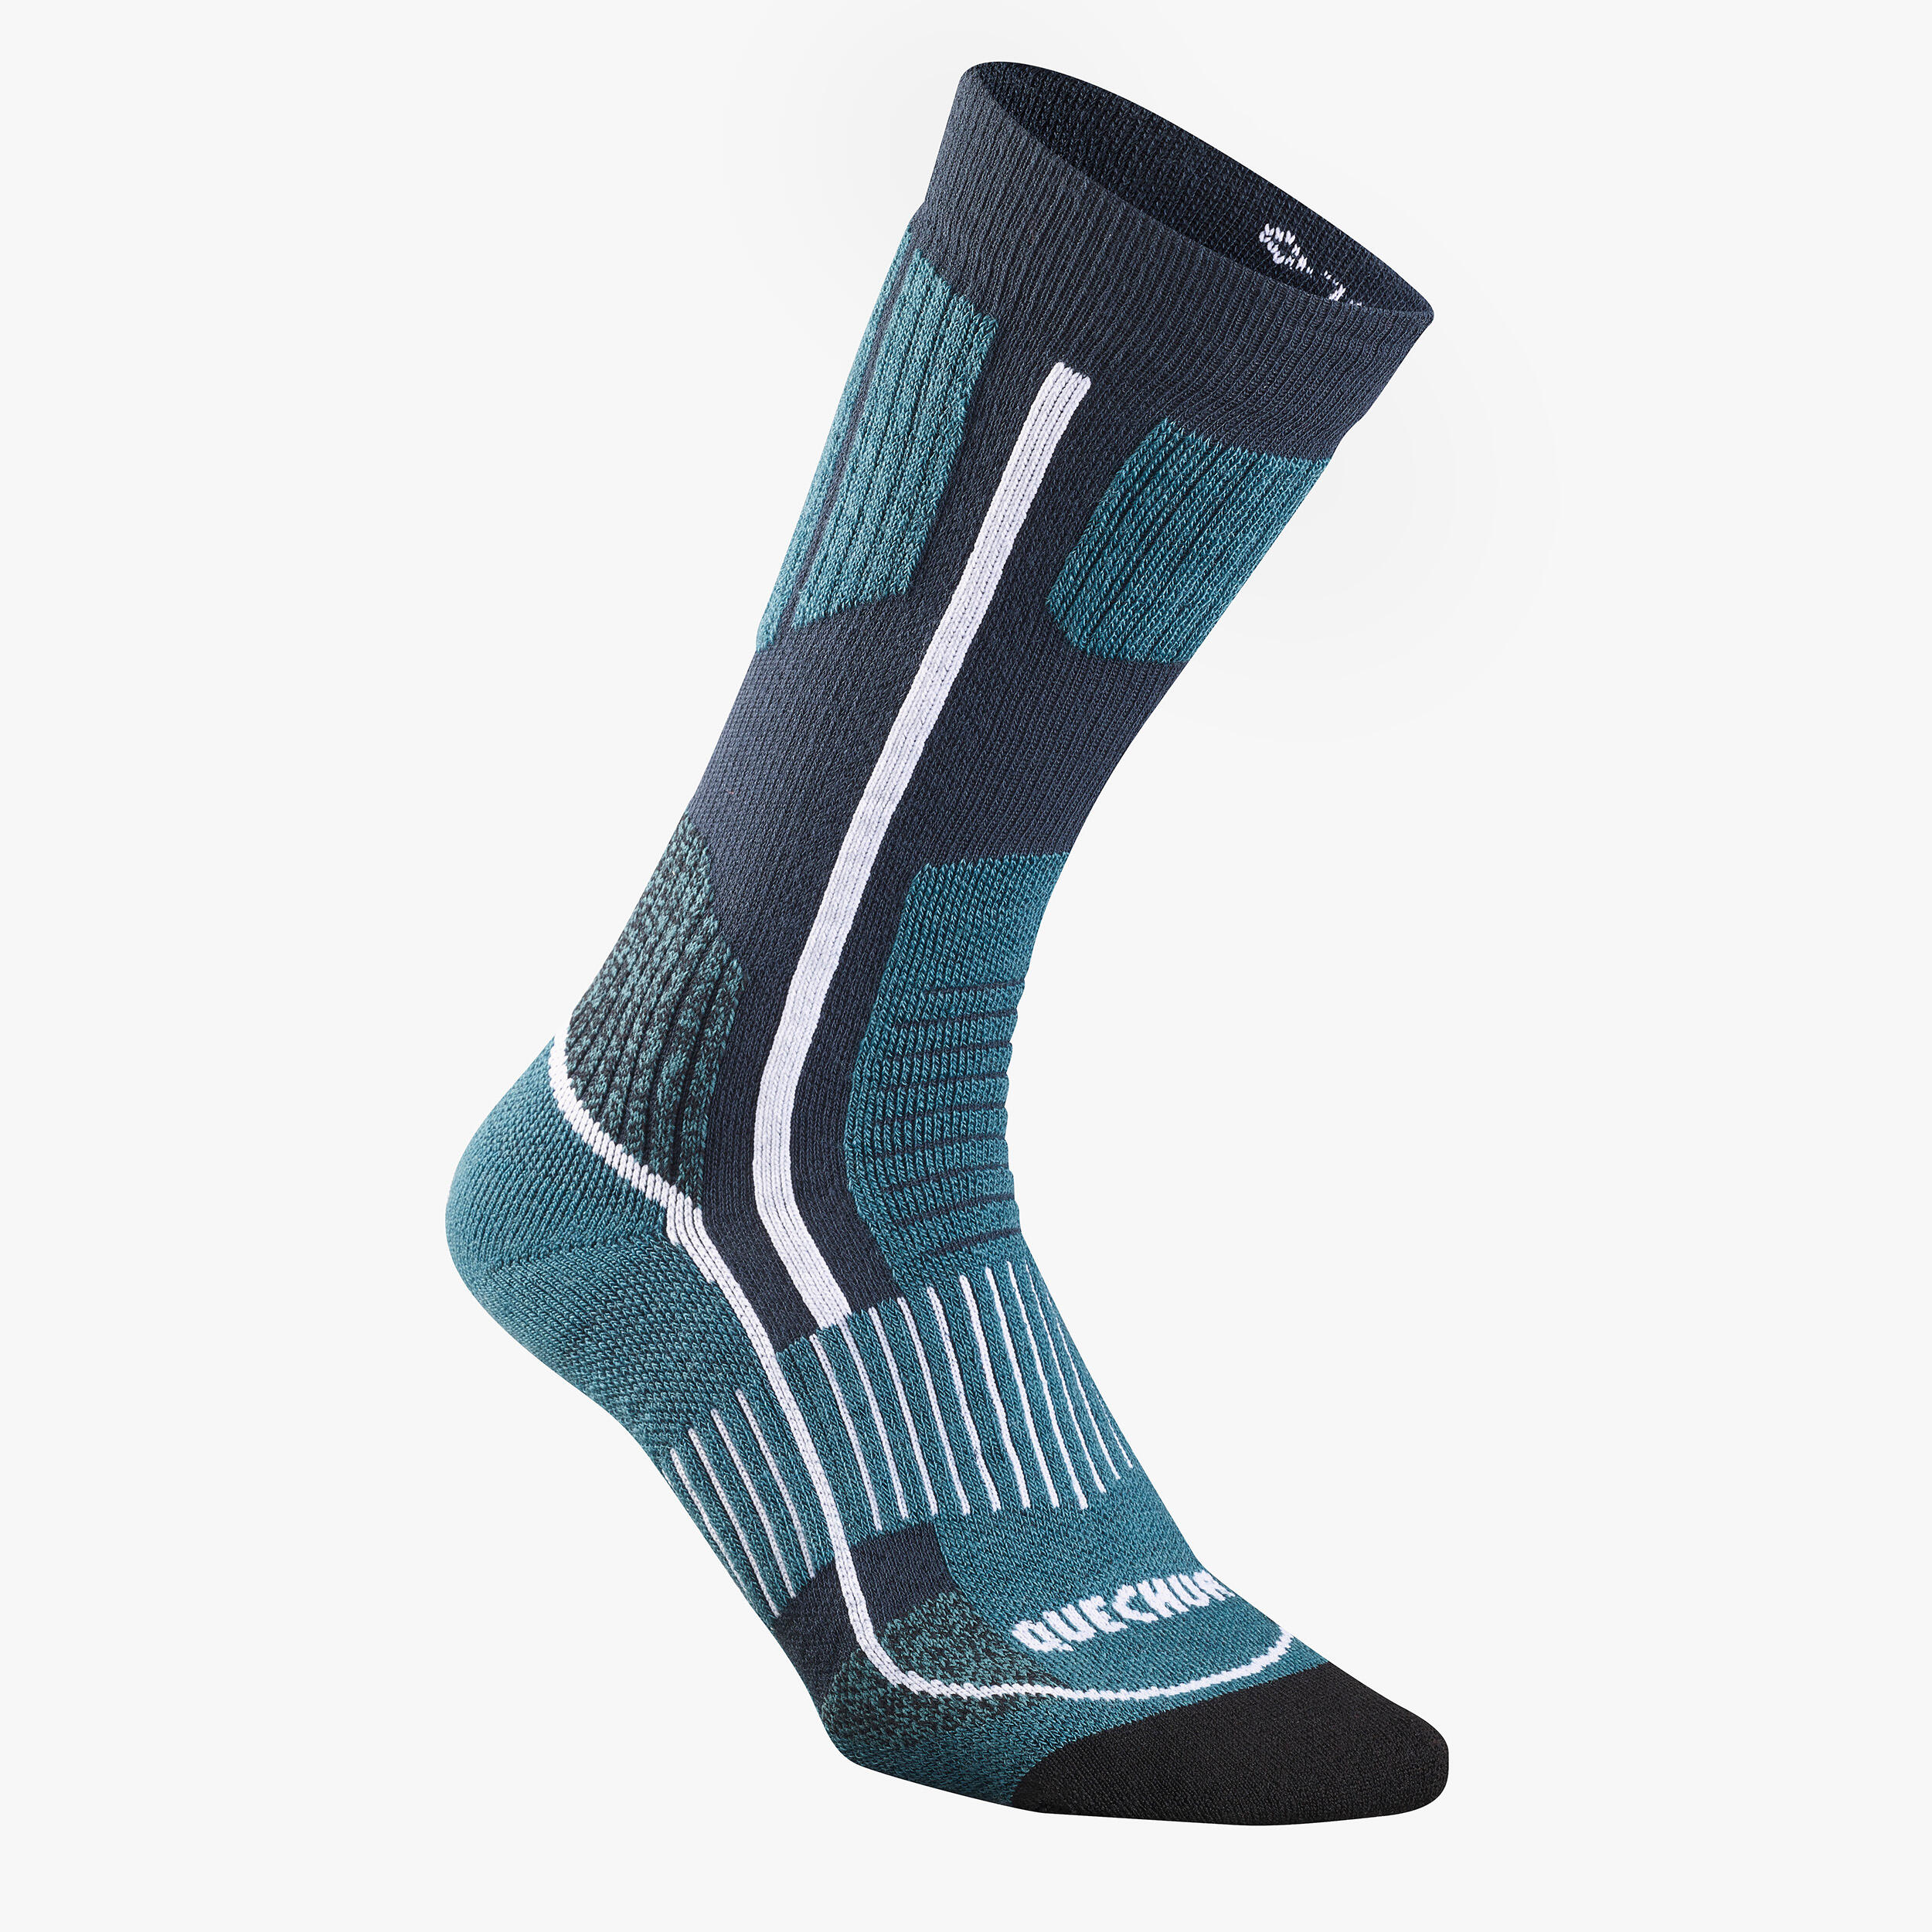 Mid-Height Hiking Socks - SH 500 Blue - Dark blue, Deep teal - Quechua - Decathlon